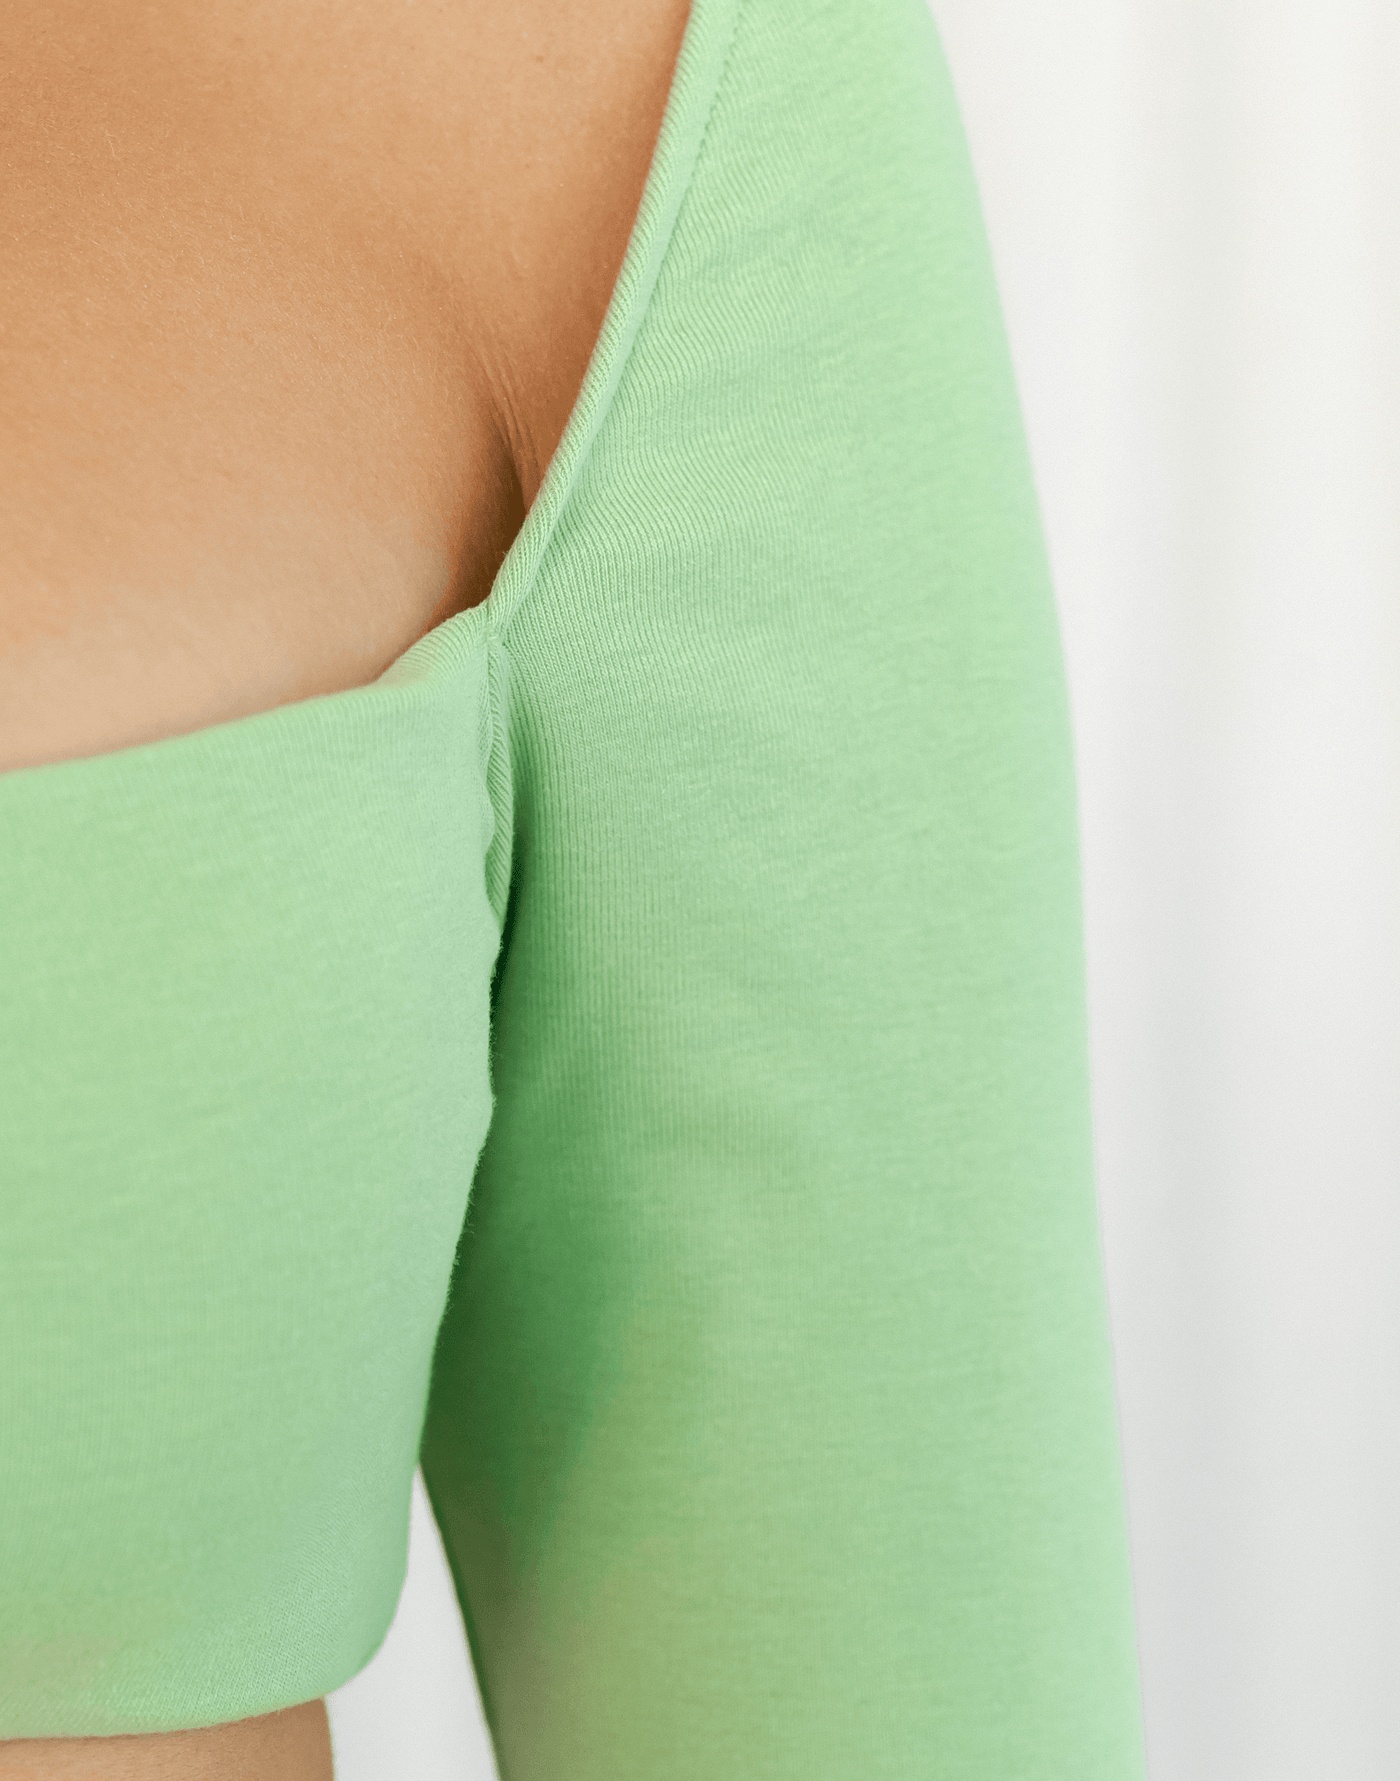 Broadway Crop Top (Green) - Long Sleeved Crop Top - Women's Top - Charcoal Clothing